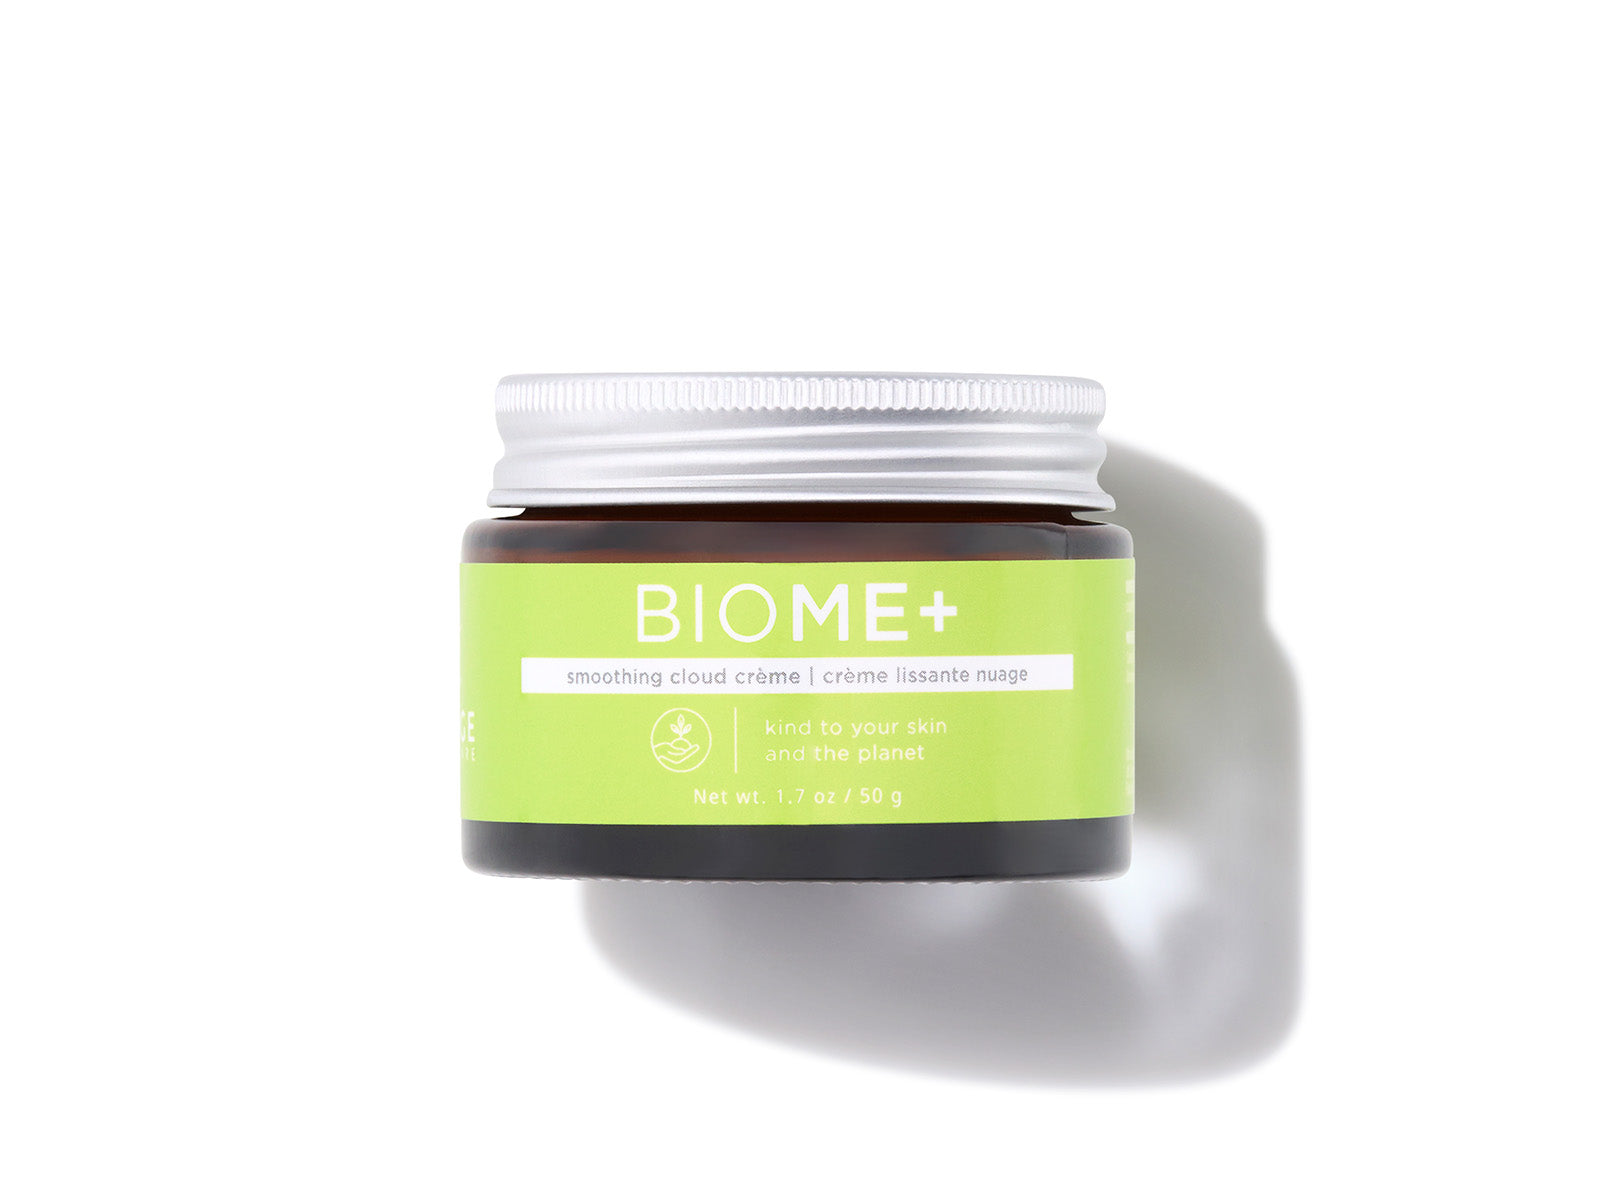 Biome+ - Smoothing Cloud Creme - Image Skincare